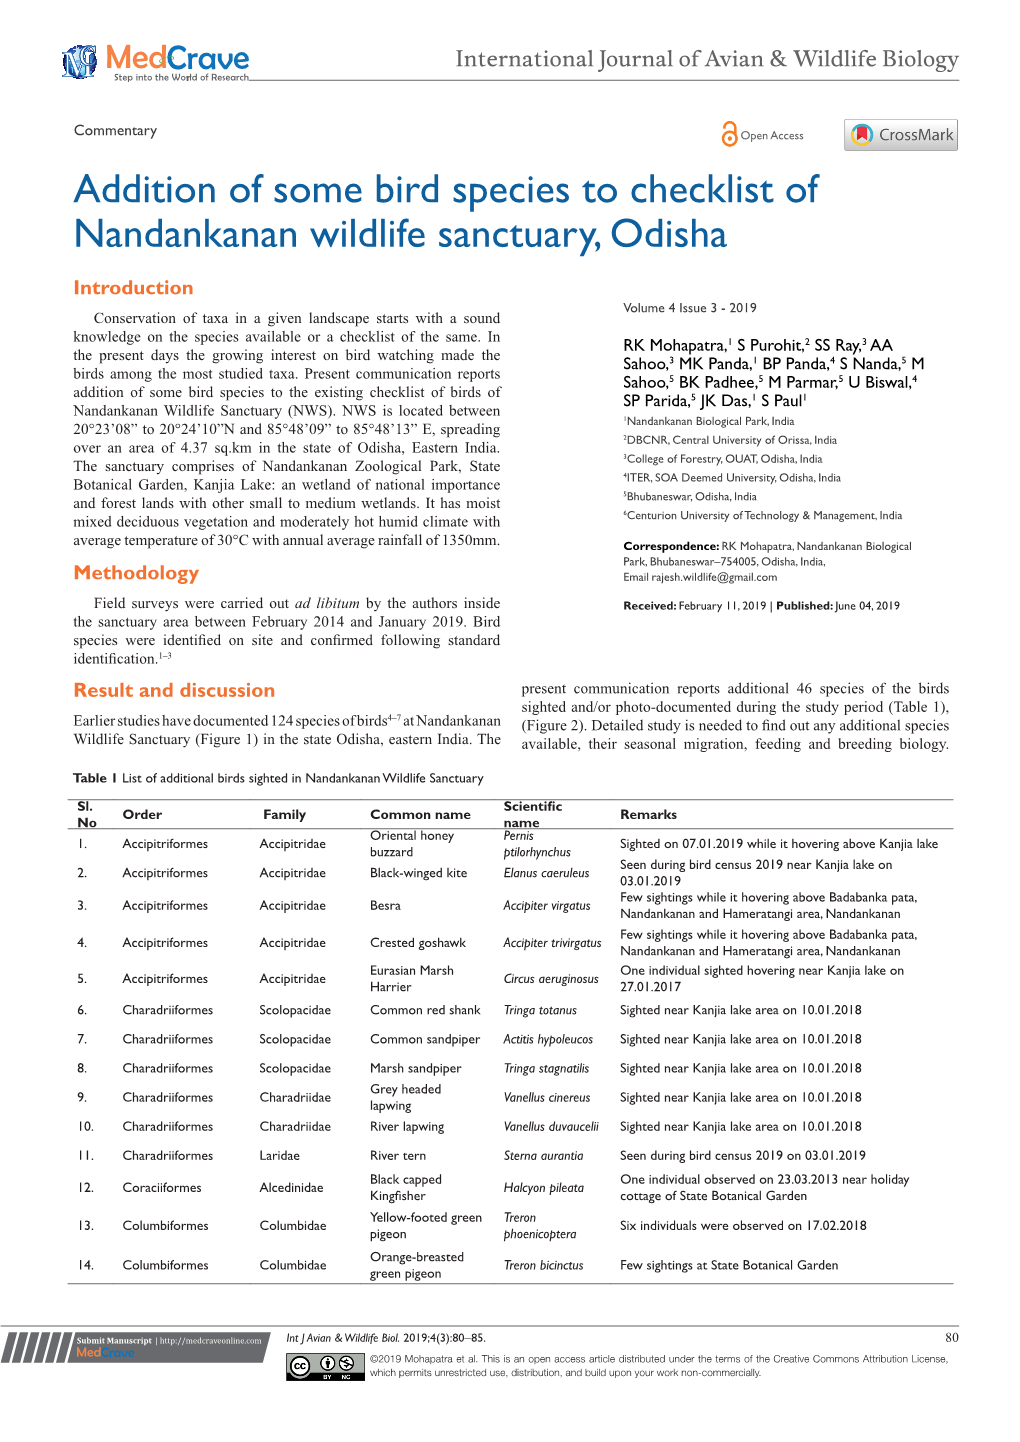 Addition of Some Bird Species to Checklist of Nandankanan Wildlife Sanctuary, Odisha